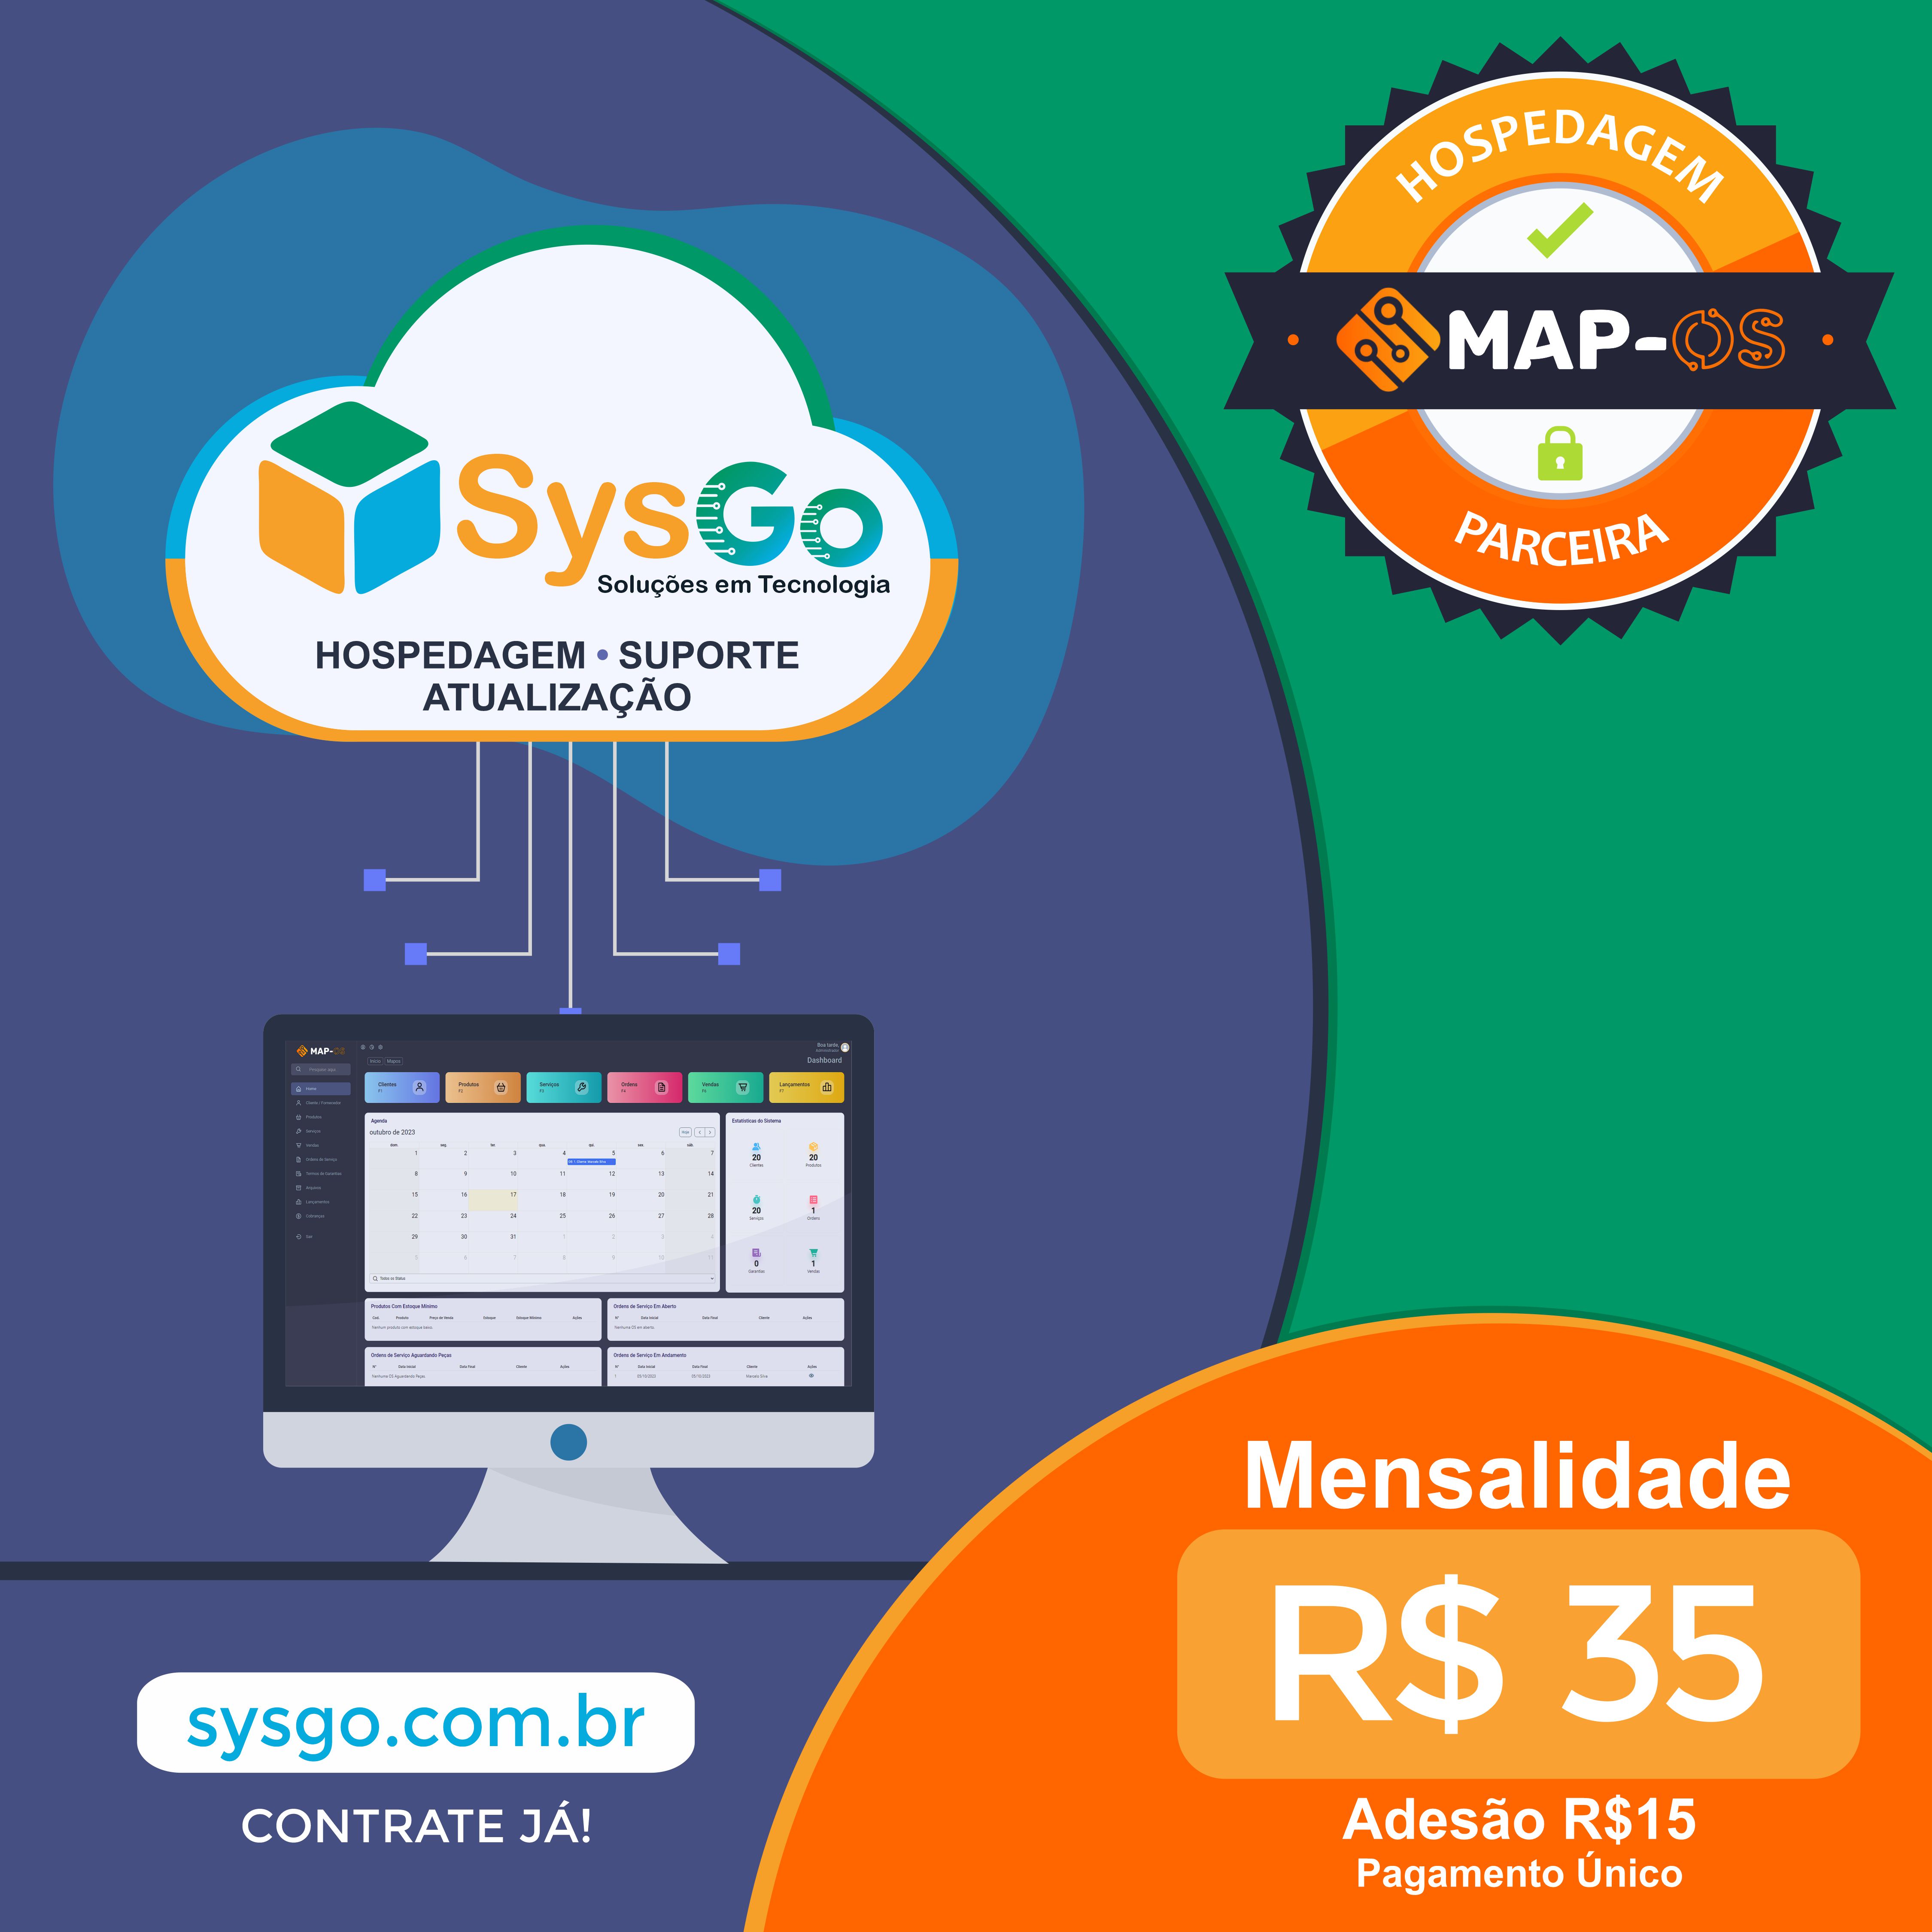 SysGO - MAP-OS Cloud Hosting